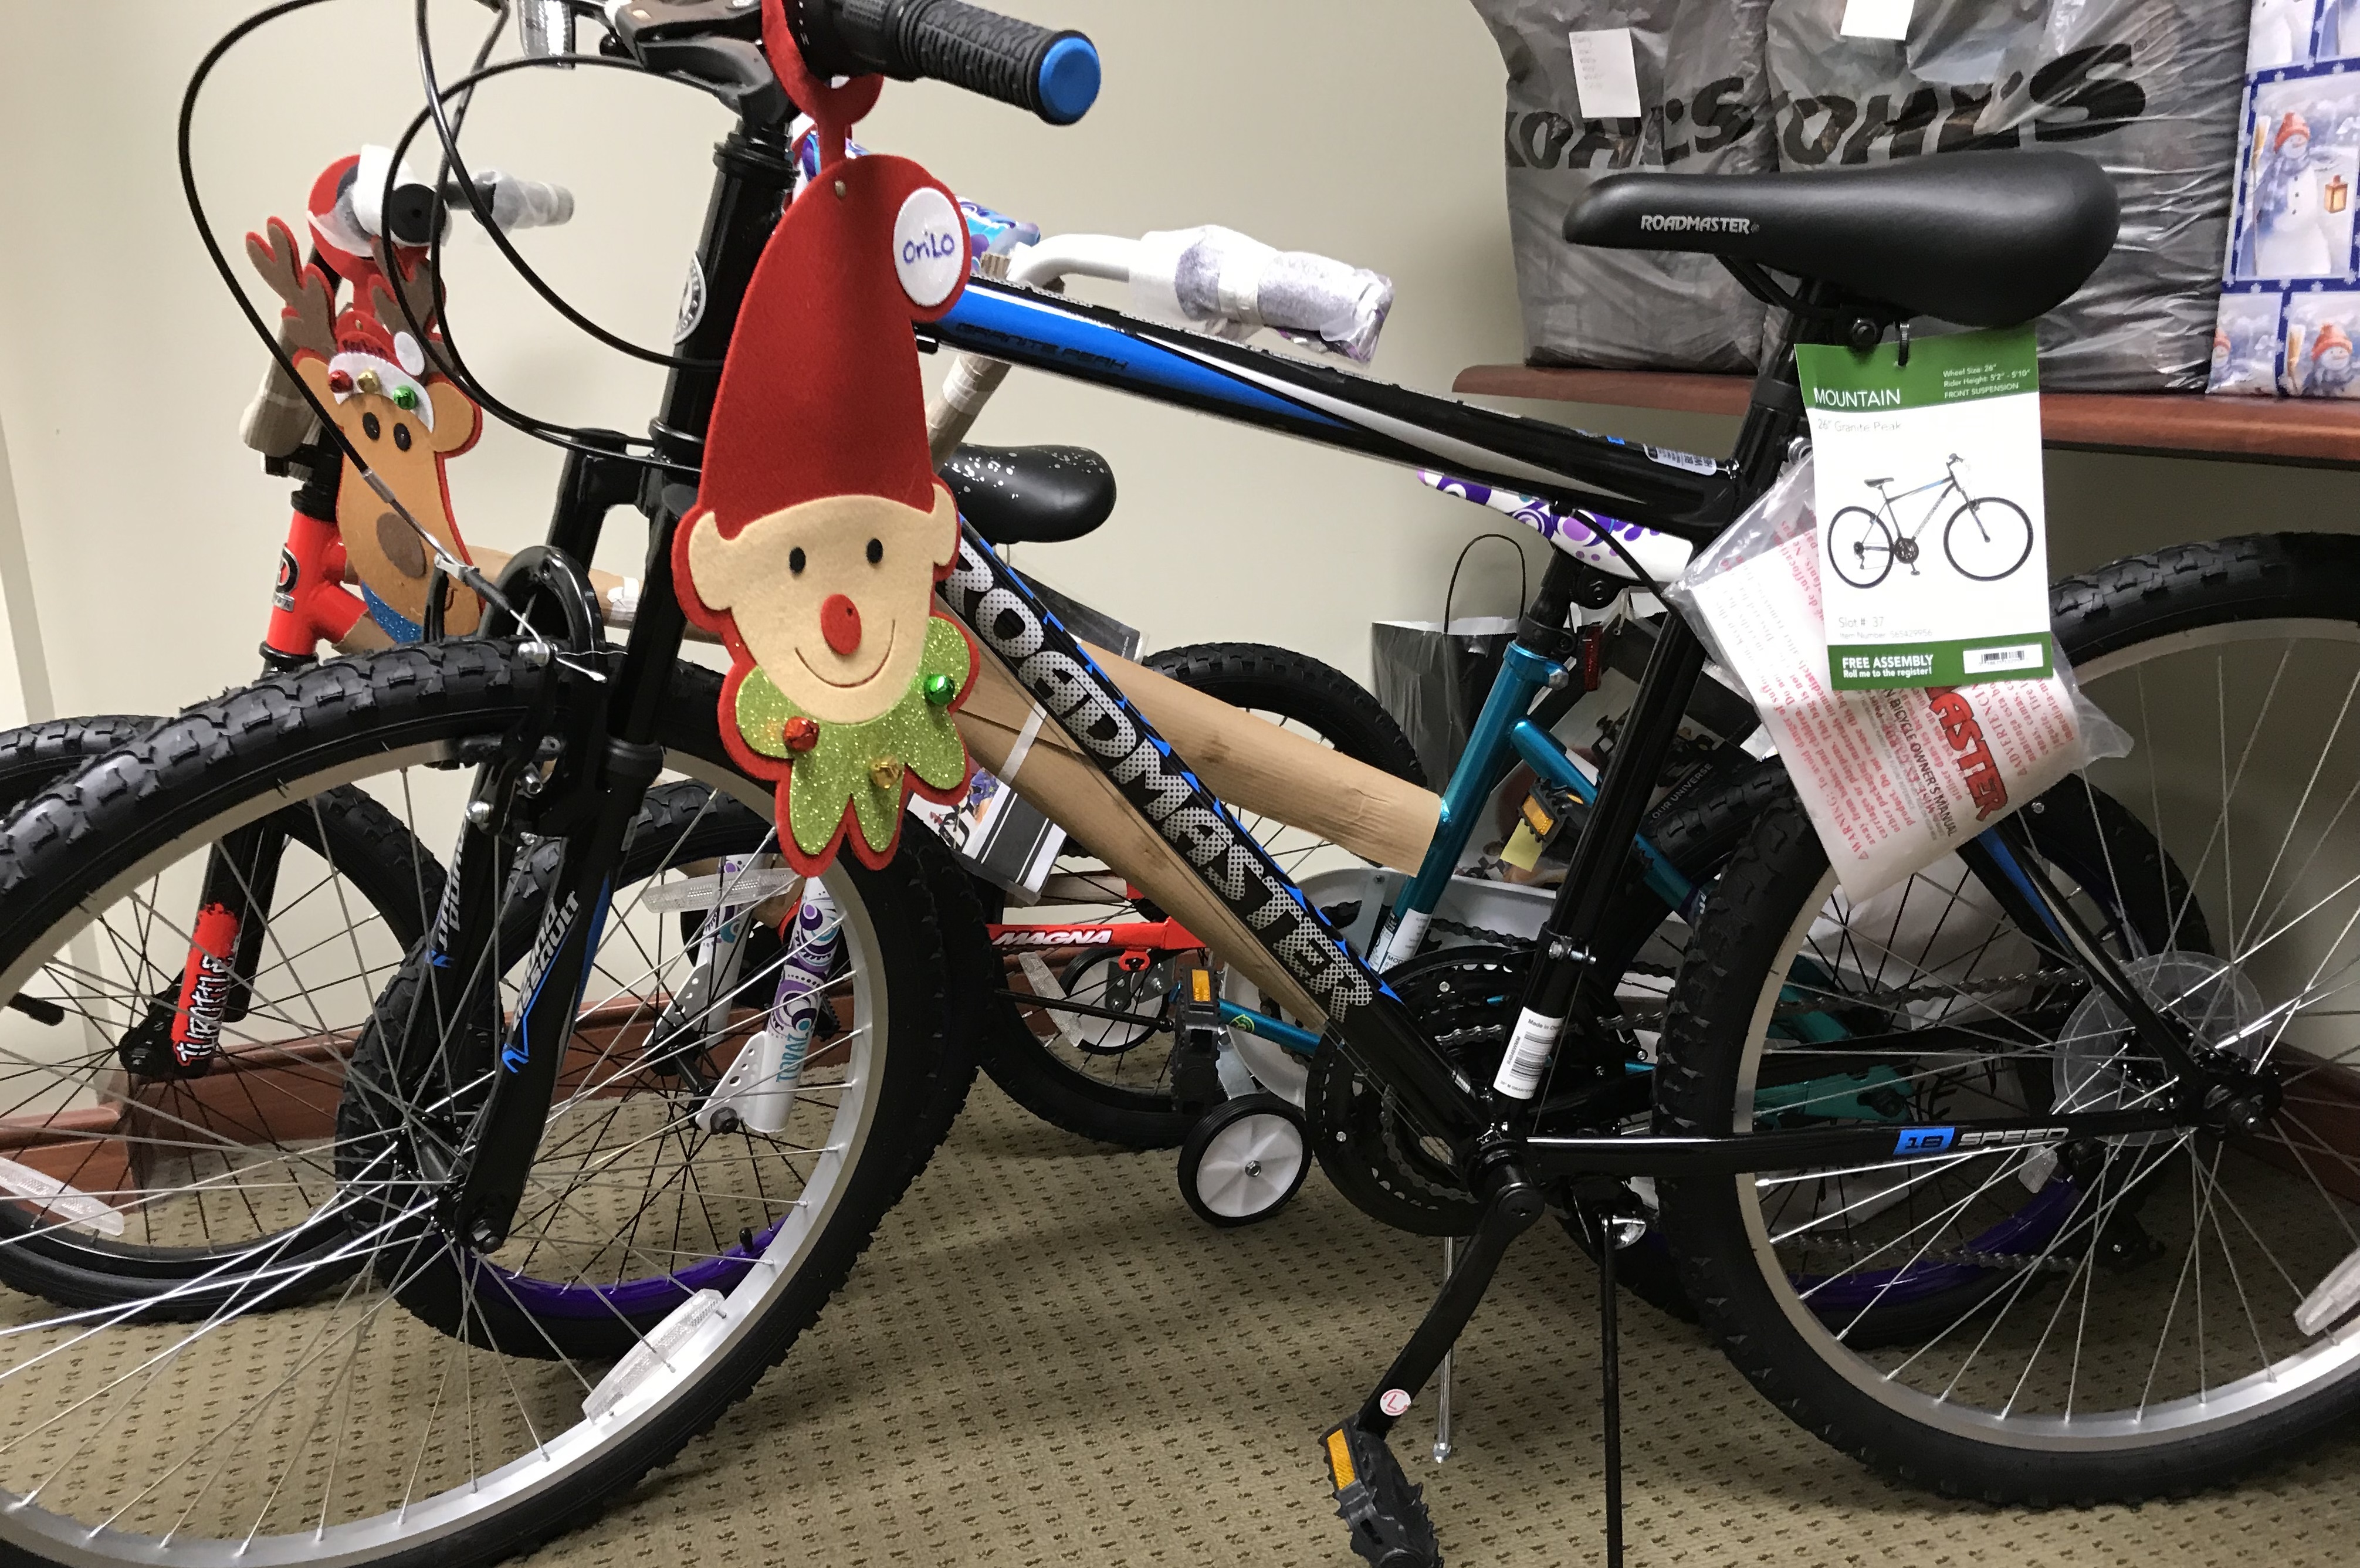 Gawthrop's holiday gift bikes for children